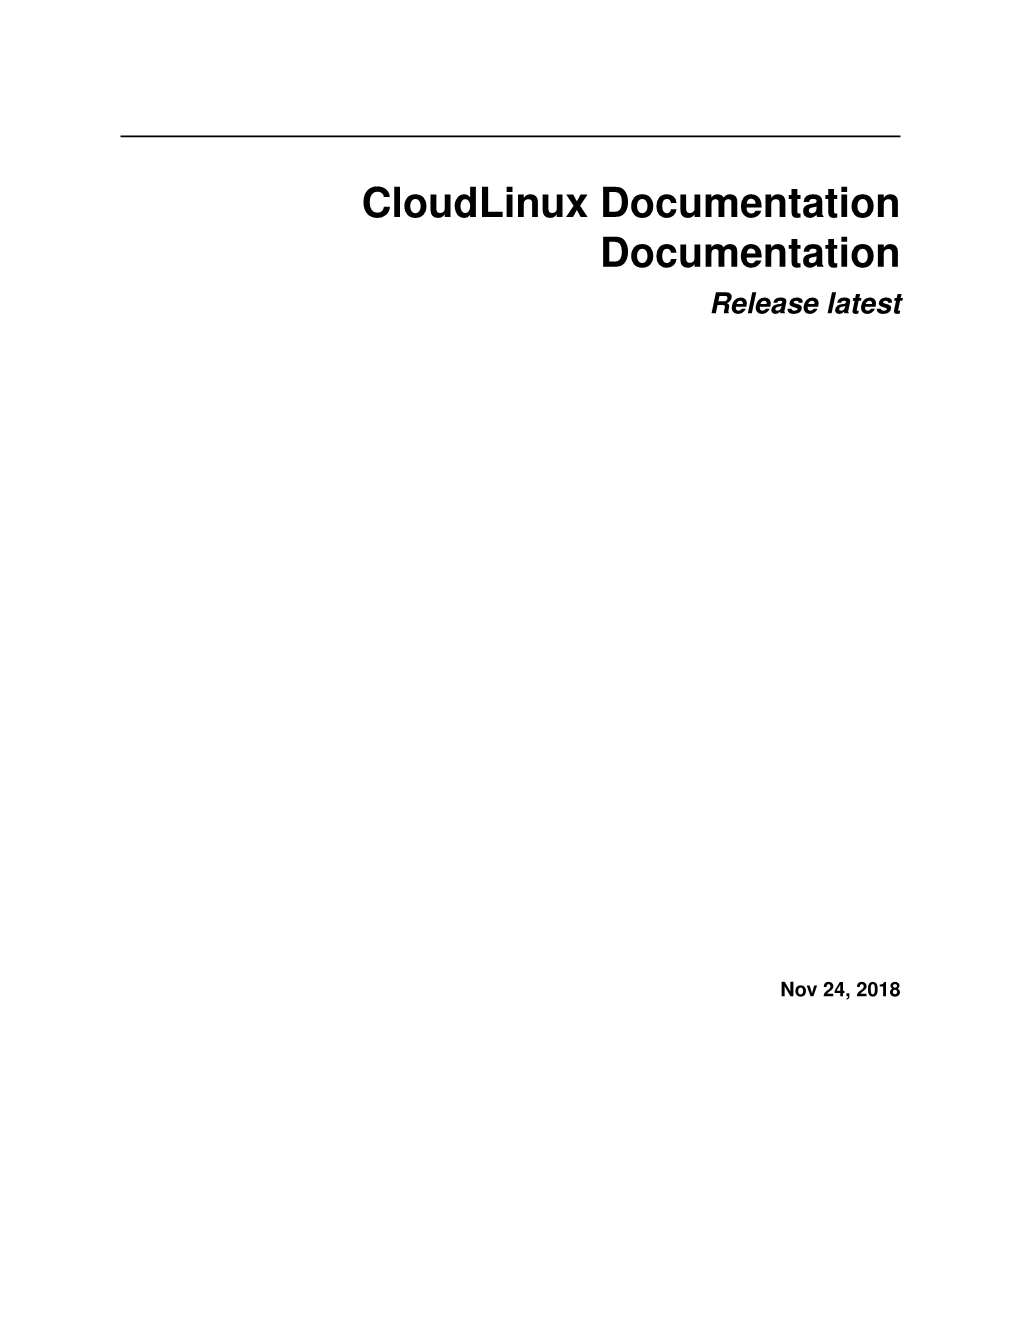 Cloudlinux Documentation Documentation Release Latest